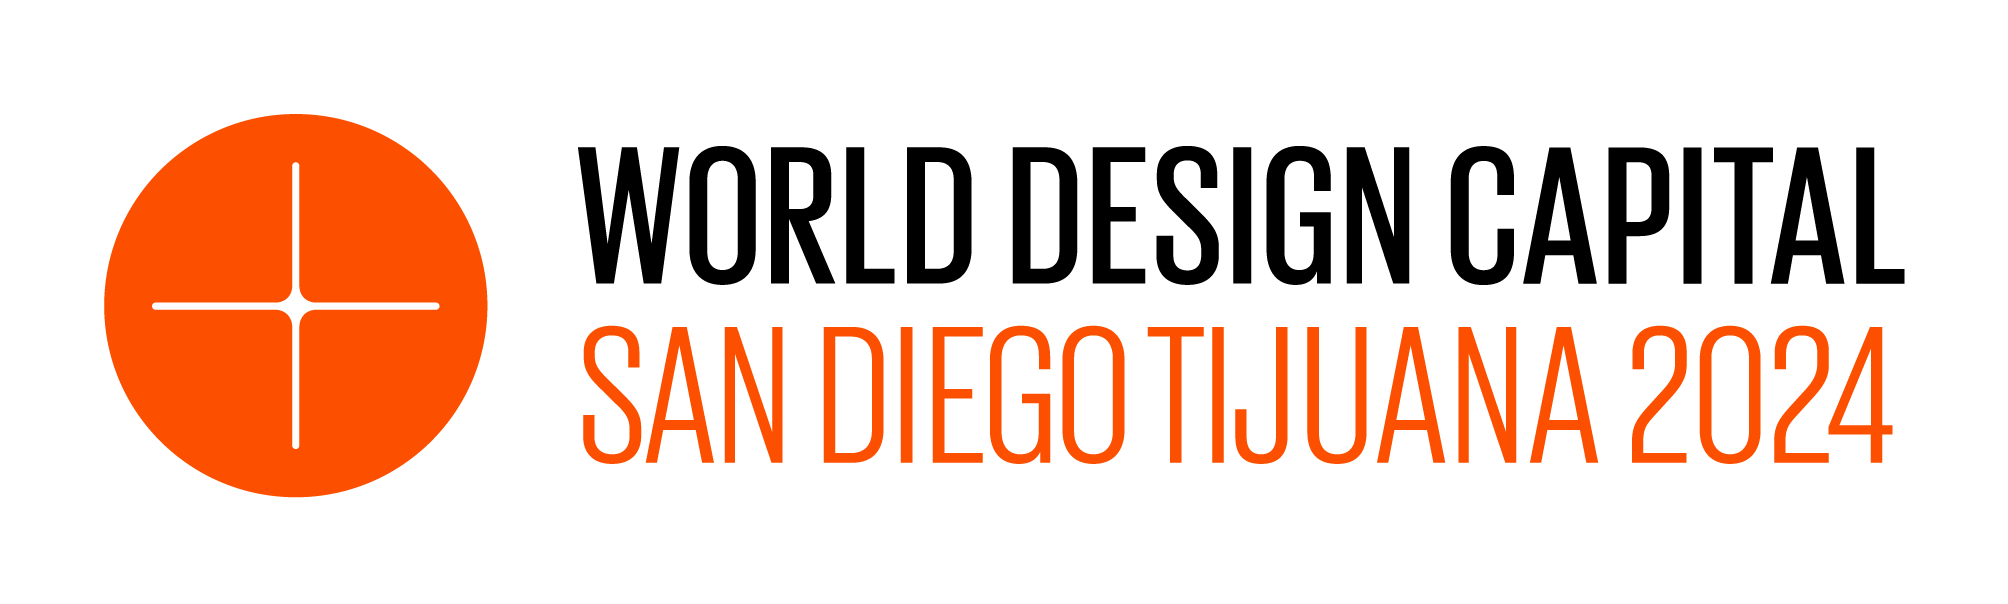 World Design Capital logo